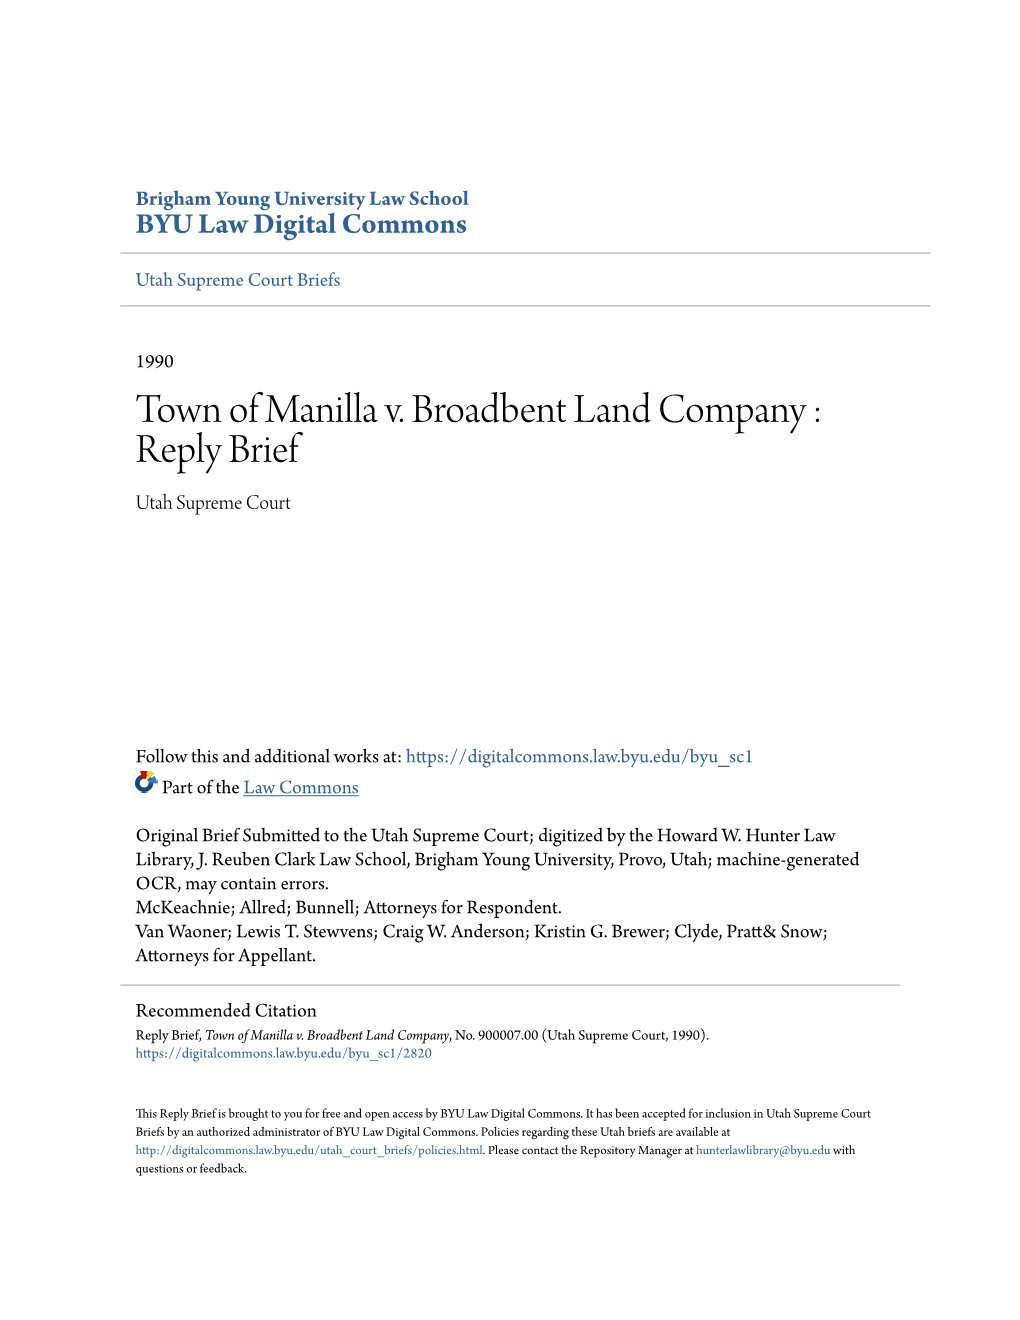 Town of Manilla V. Broadbent Land Company : Reply Brief Utah Supreme Court